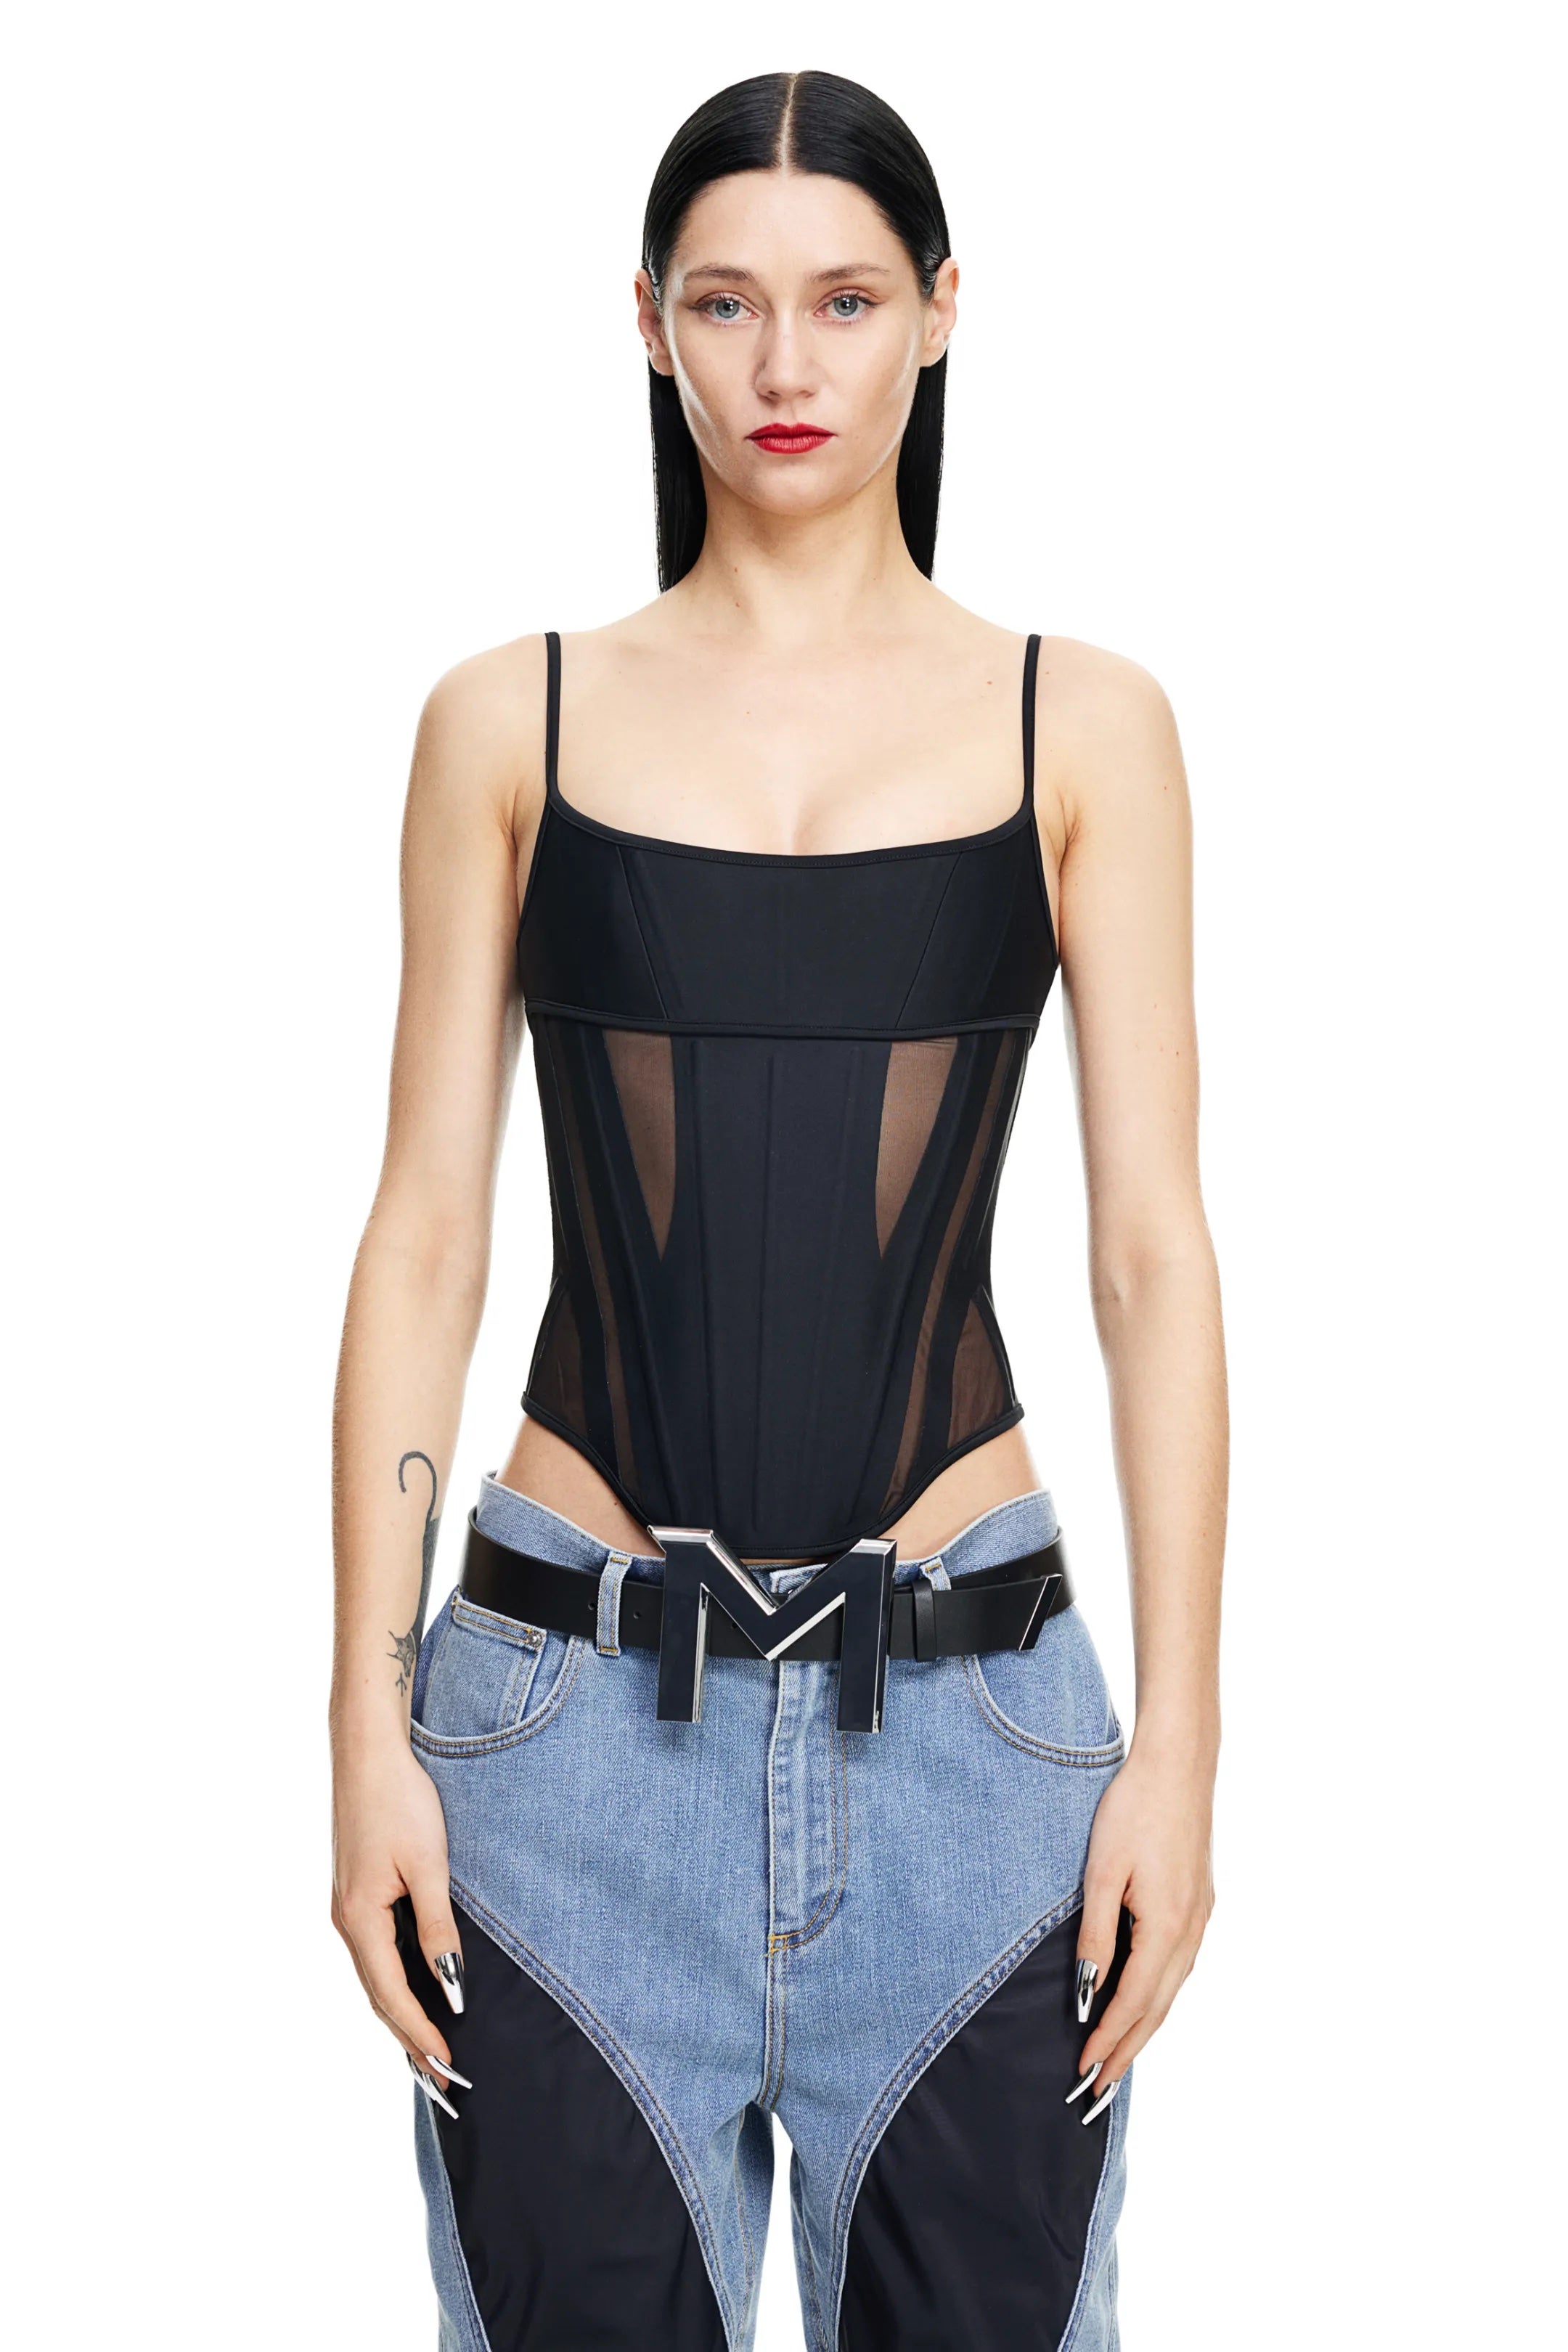 Black corset top with H&M Jeans  Black corset top, Black corset, H&m jeans